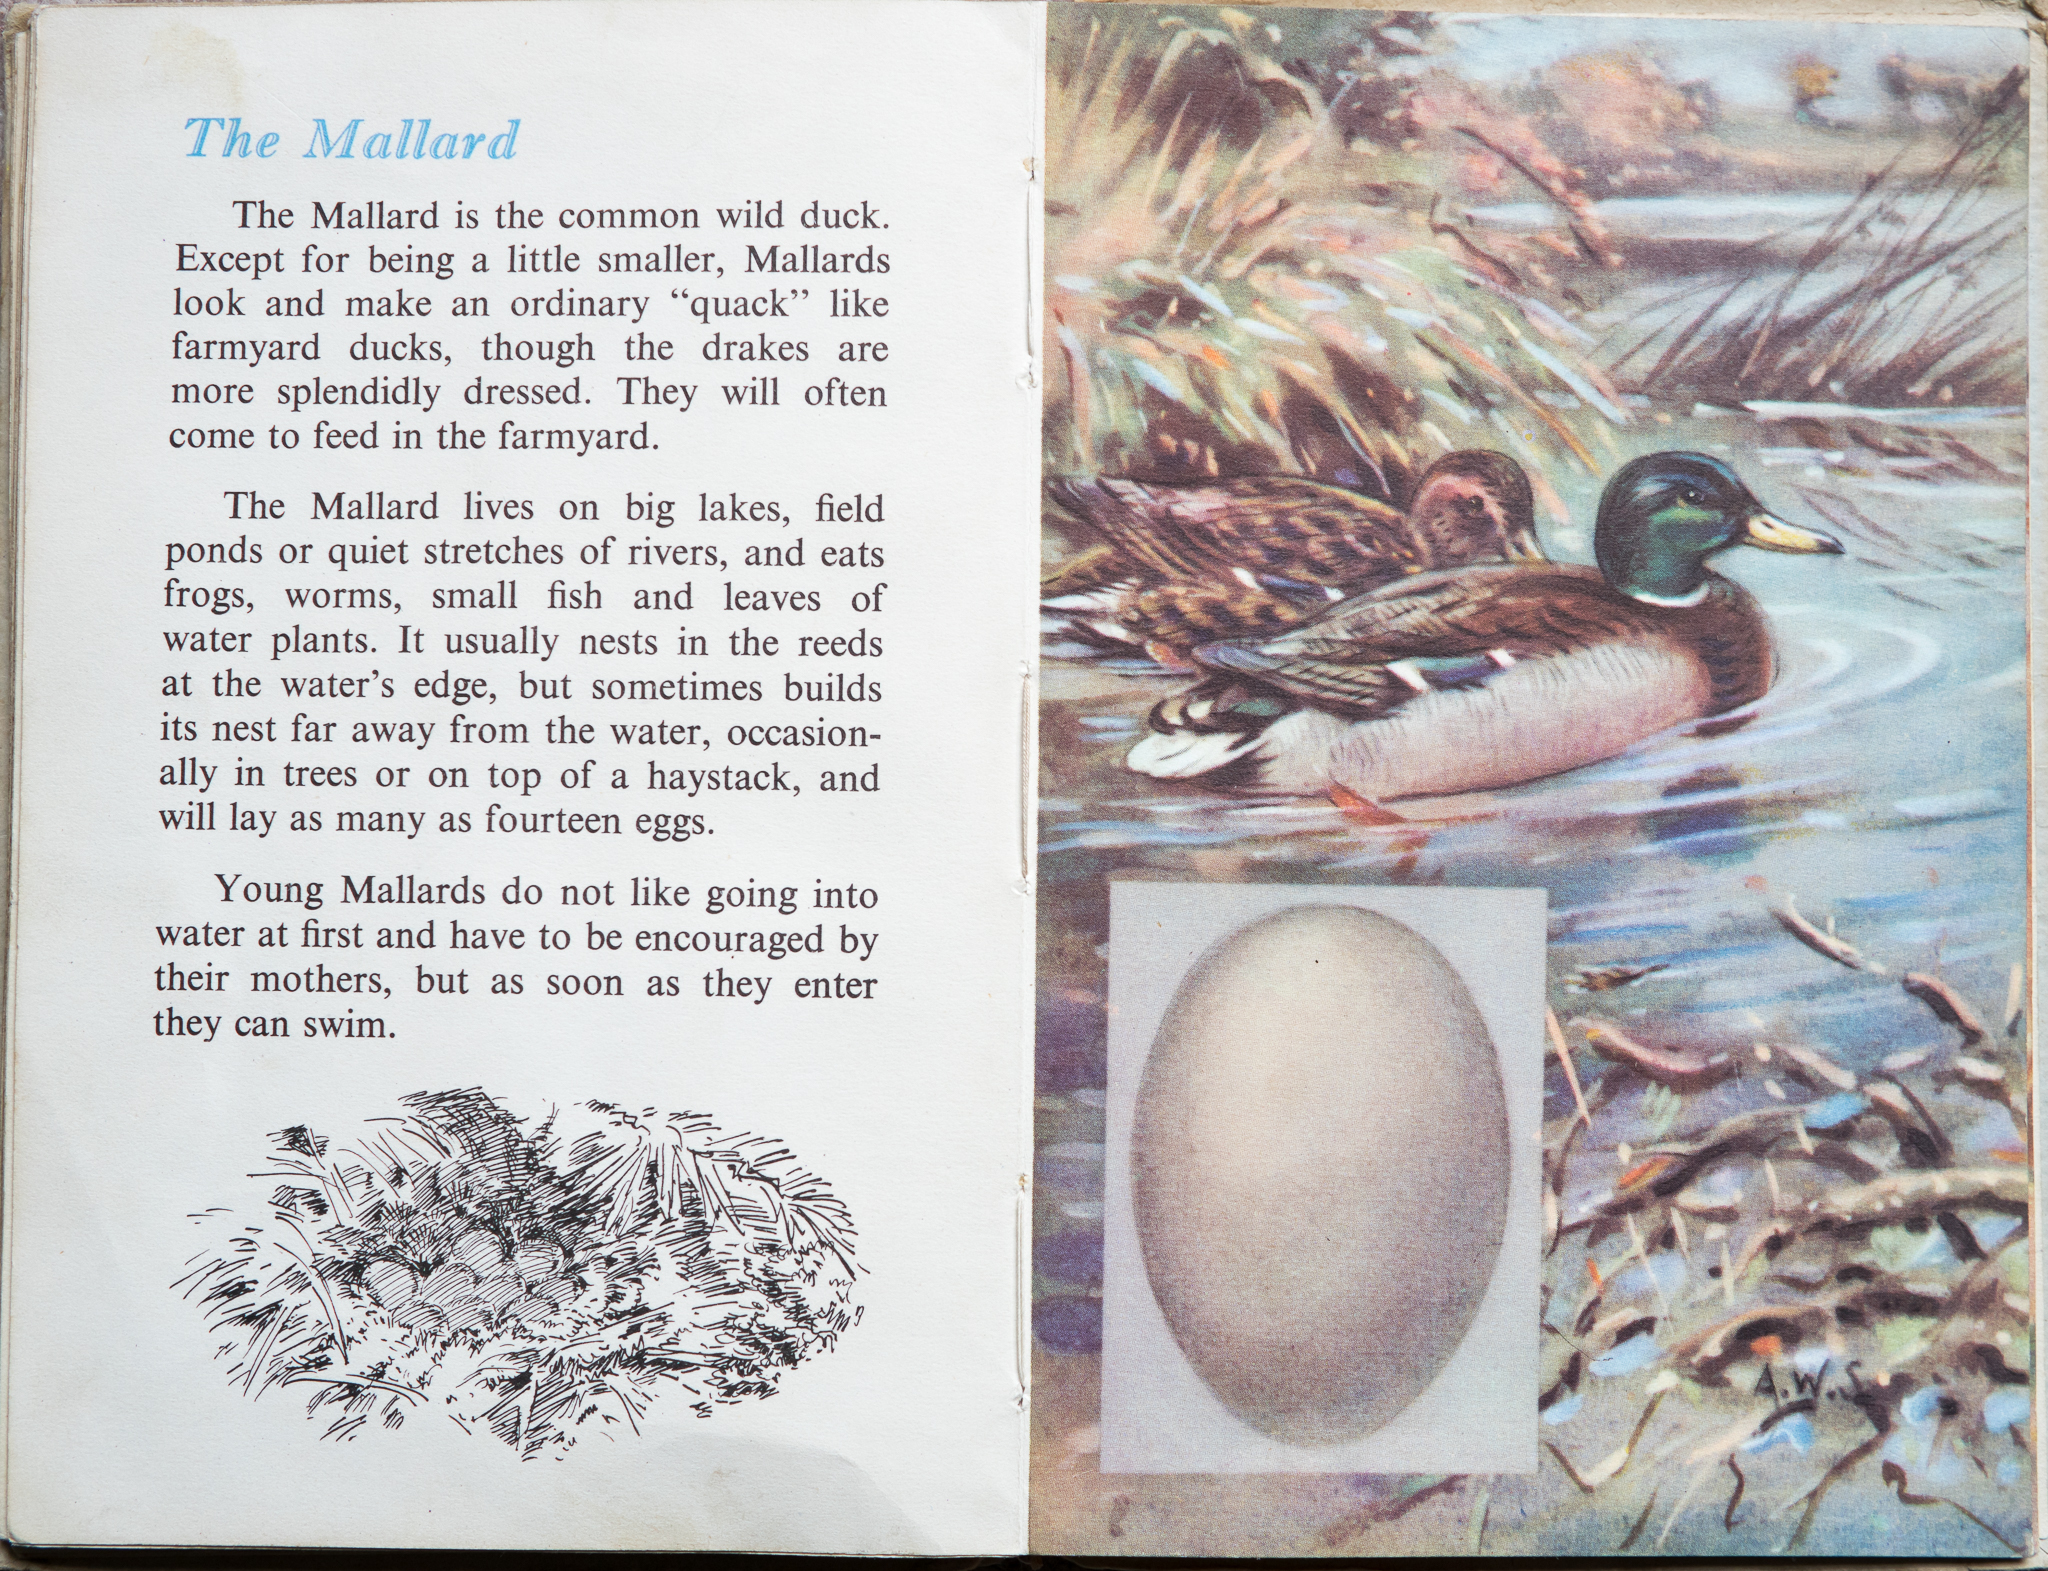 The Second Ladybird Book of British Birds - The Mallard